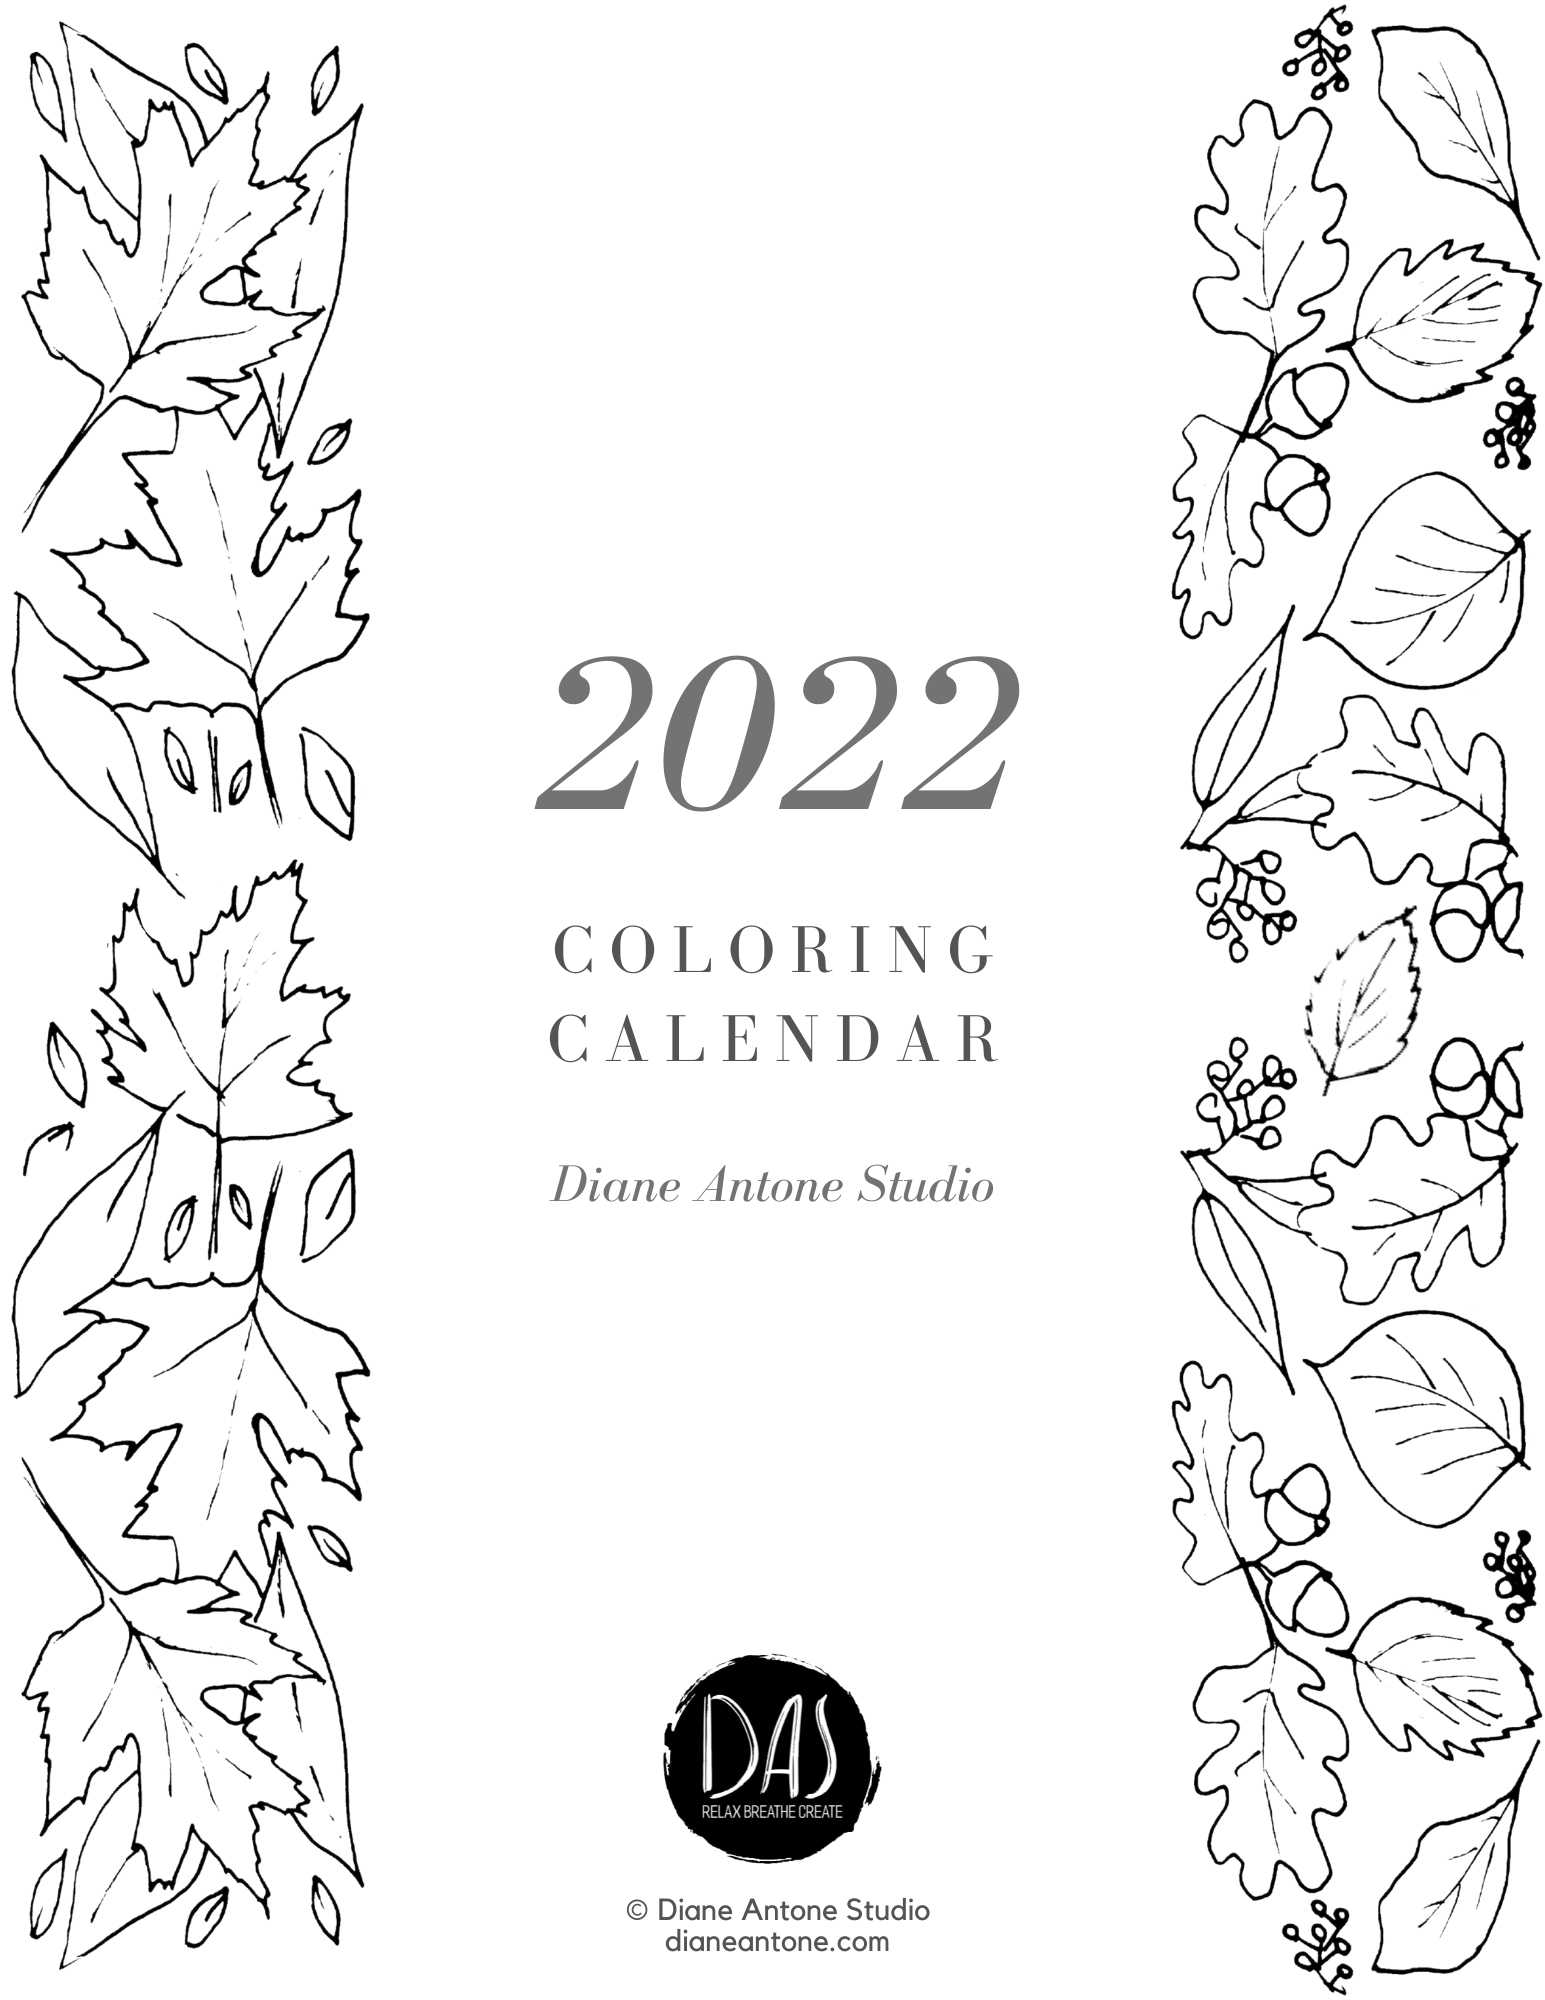 2022 Coloring Calendar Diane Antone Studio